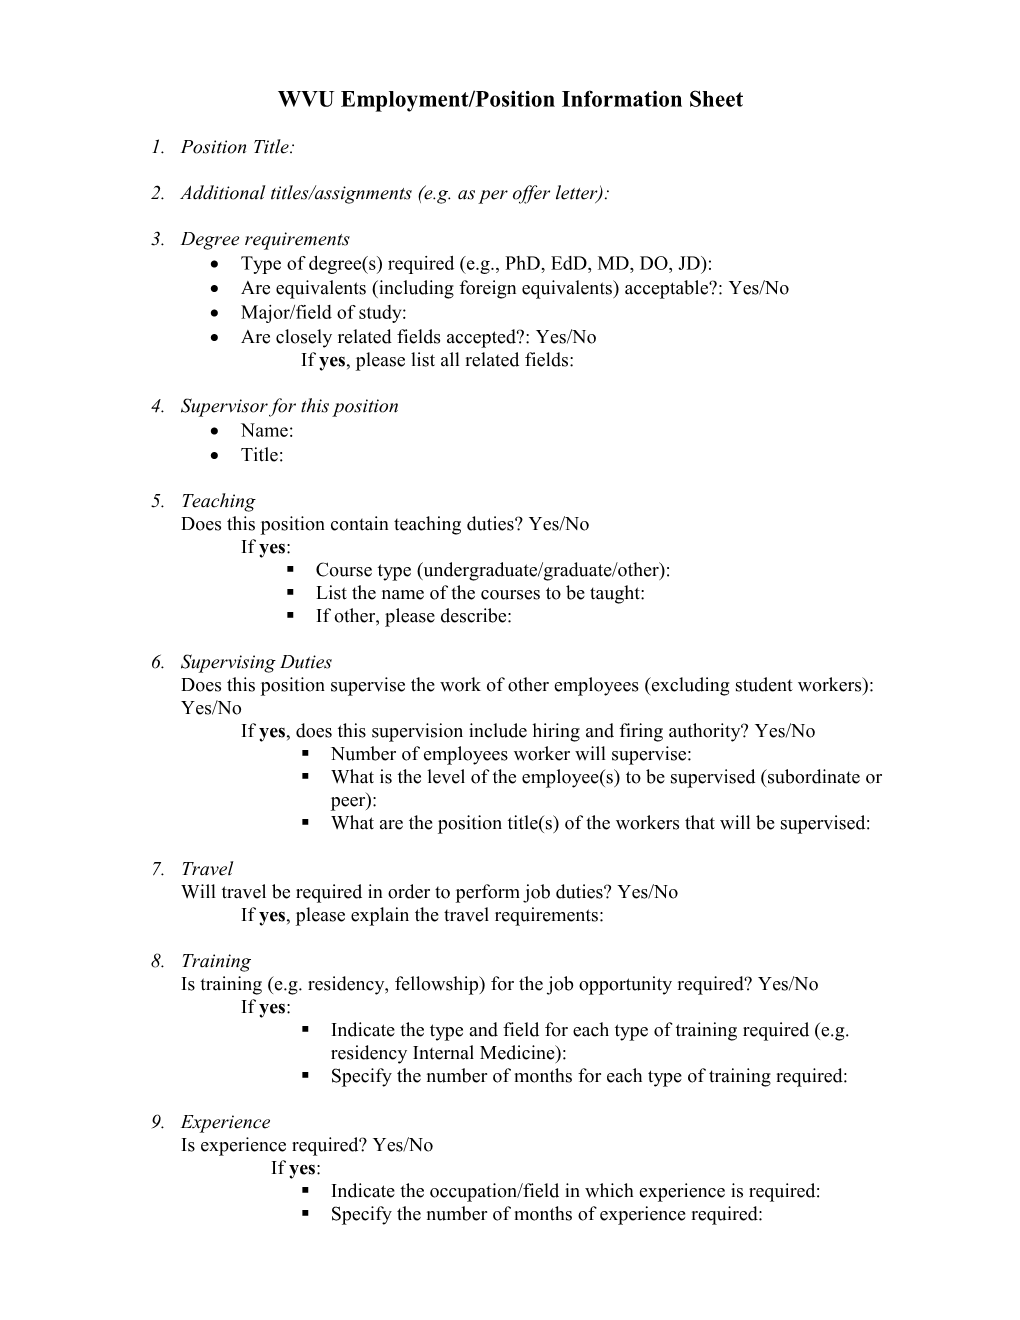 H-1B Employment/Position Information Sheet